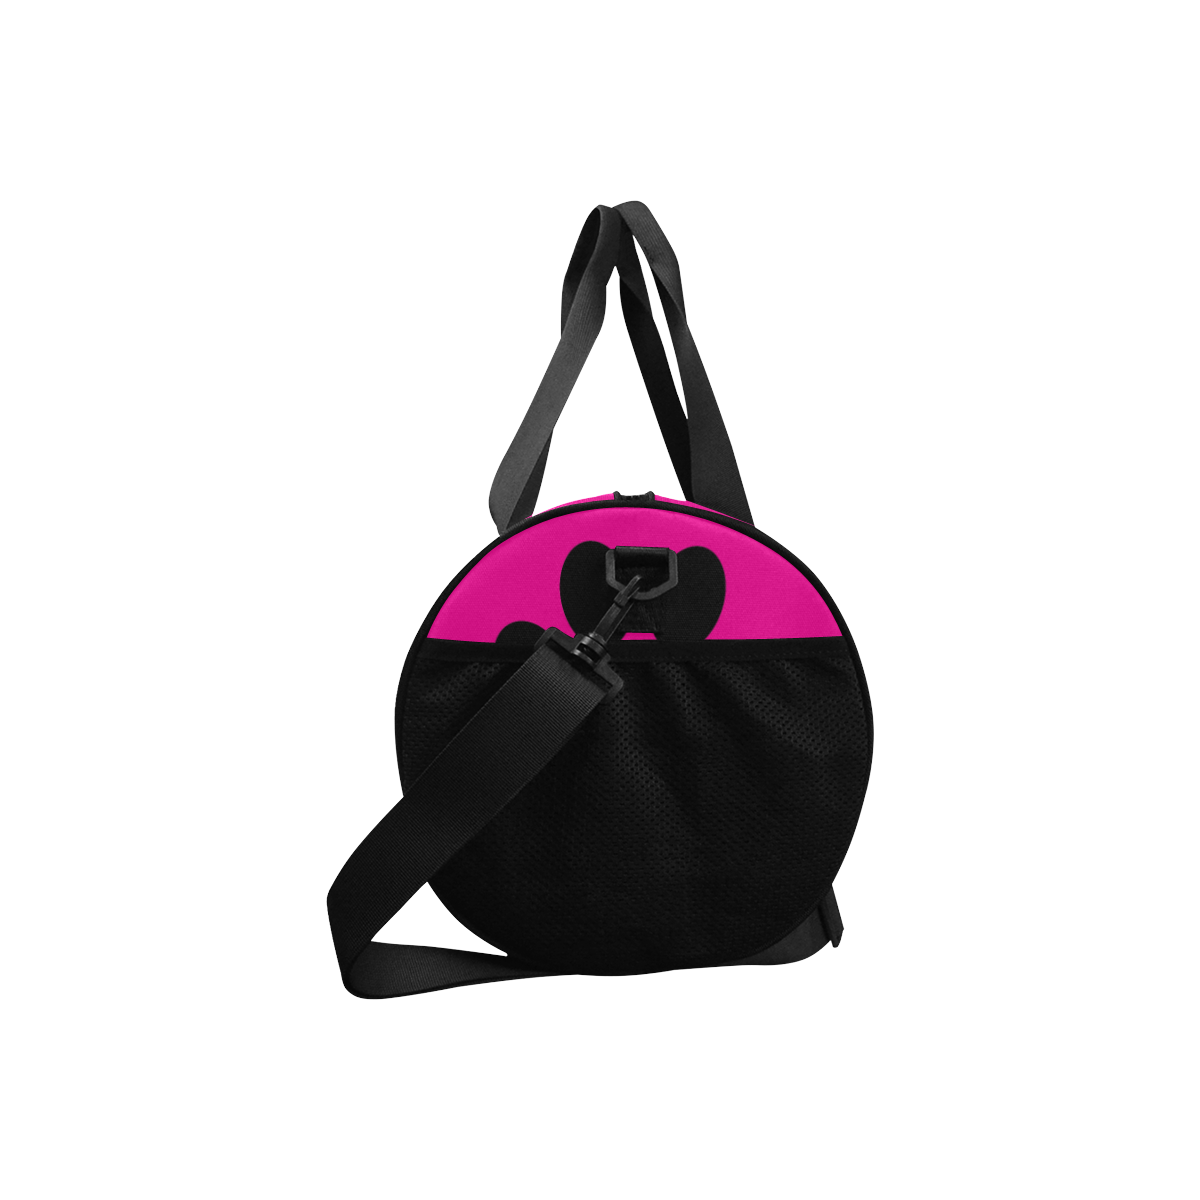 BooBooFace Large Duffel Bag Pink from MacAi & Co Duffle Bag (Model 1679)